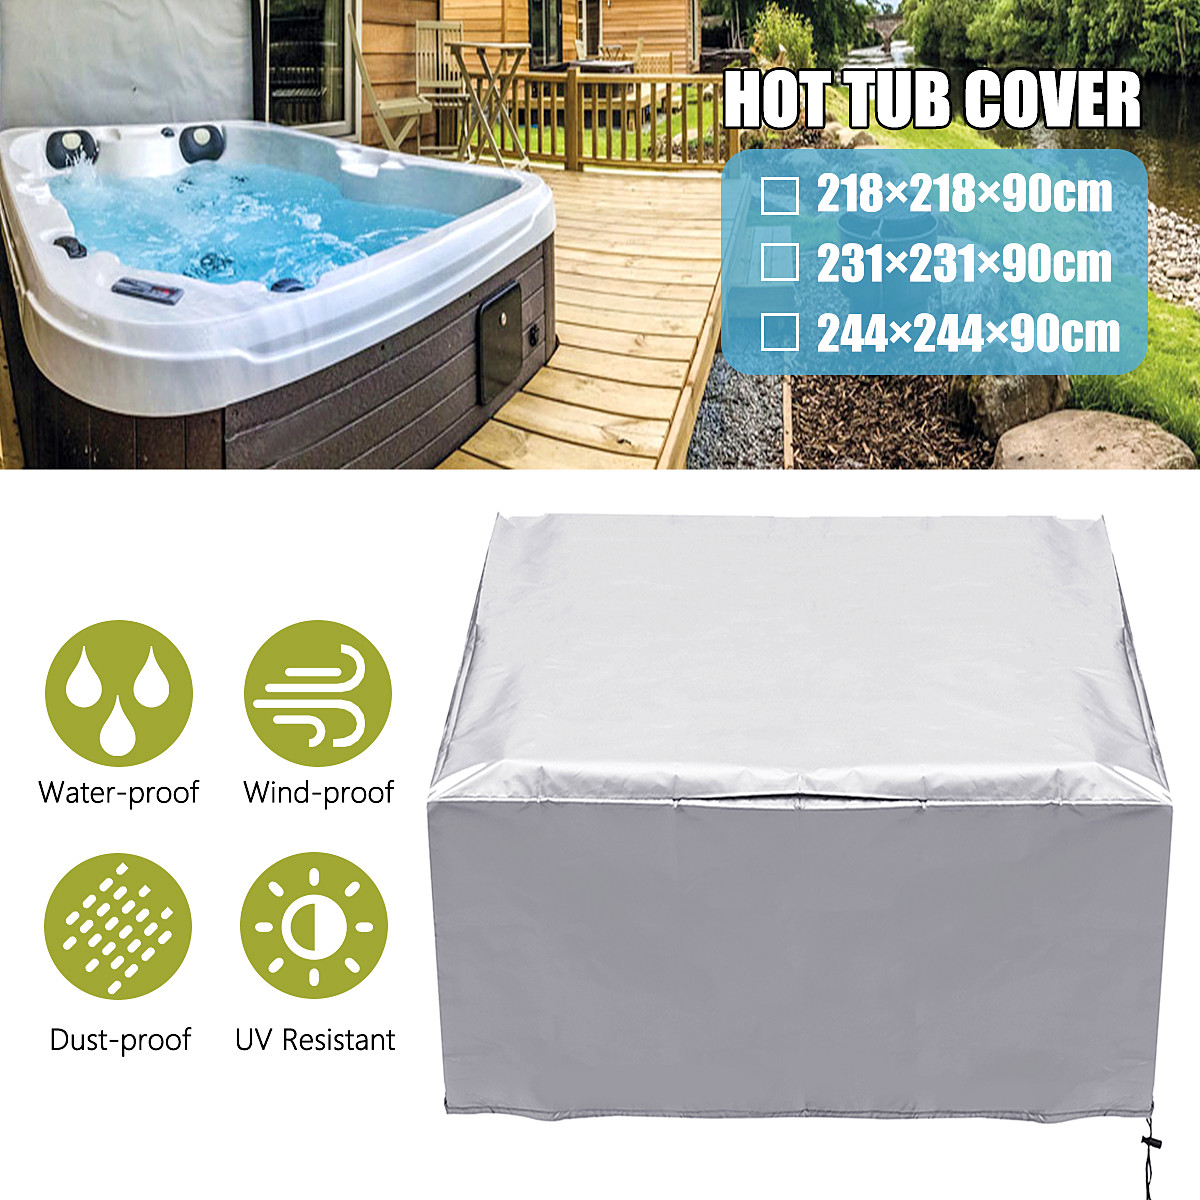 Bathub-Spa-Cover-Cap-Square-Protecter-Anti-UV-Dust-proof-Bathtub-Cover-Bathroom-Supplies-1634164-1